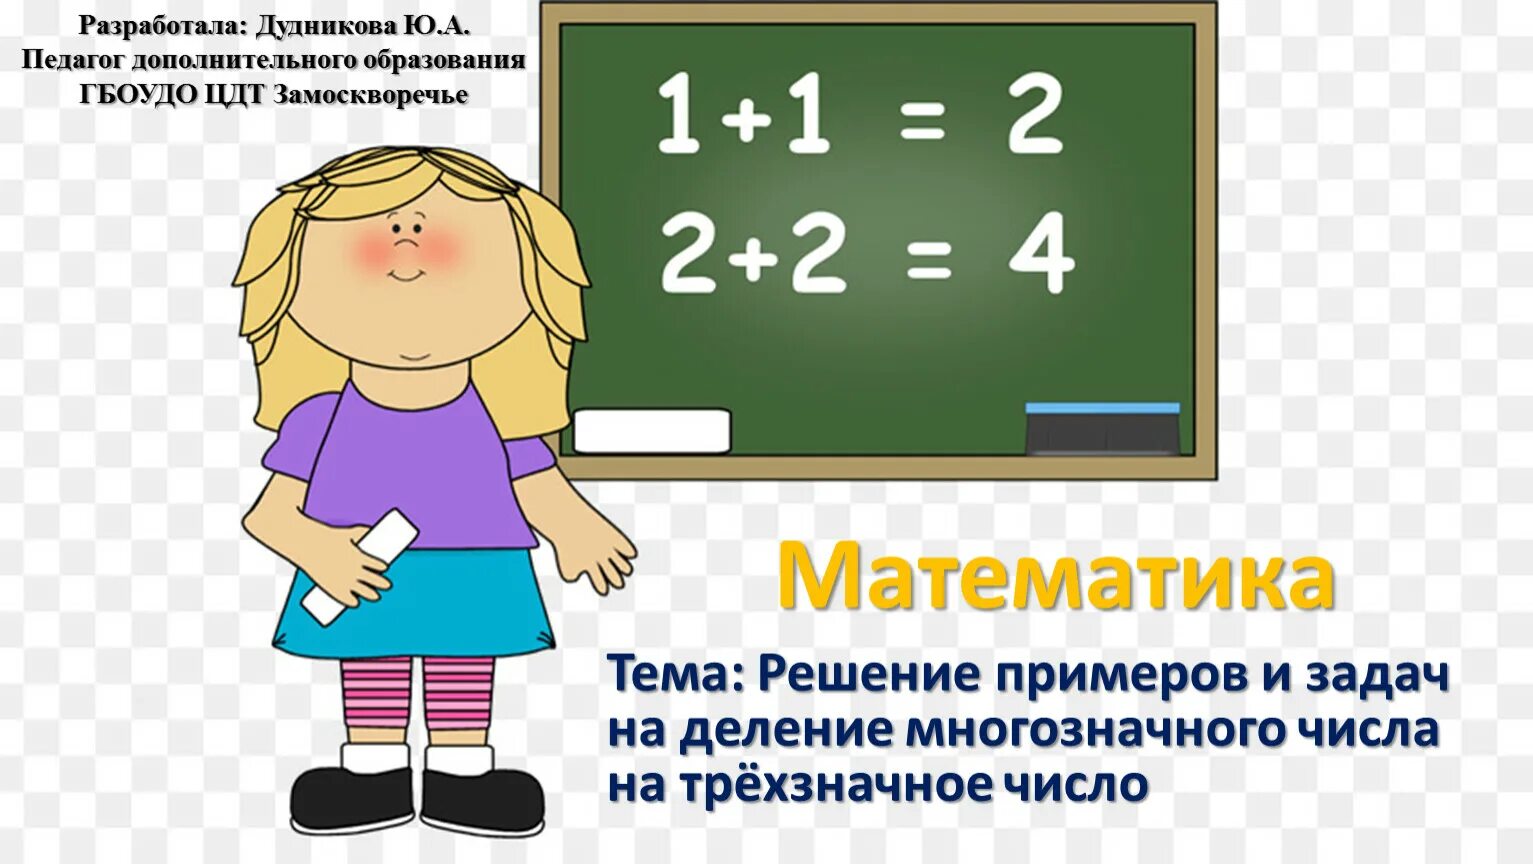 Посмотри картинку решить. Рисунки для математики. Урок математики картинка. Математические картинки для презентаций. Картинки про математику для детей.